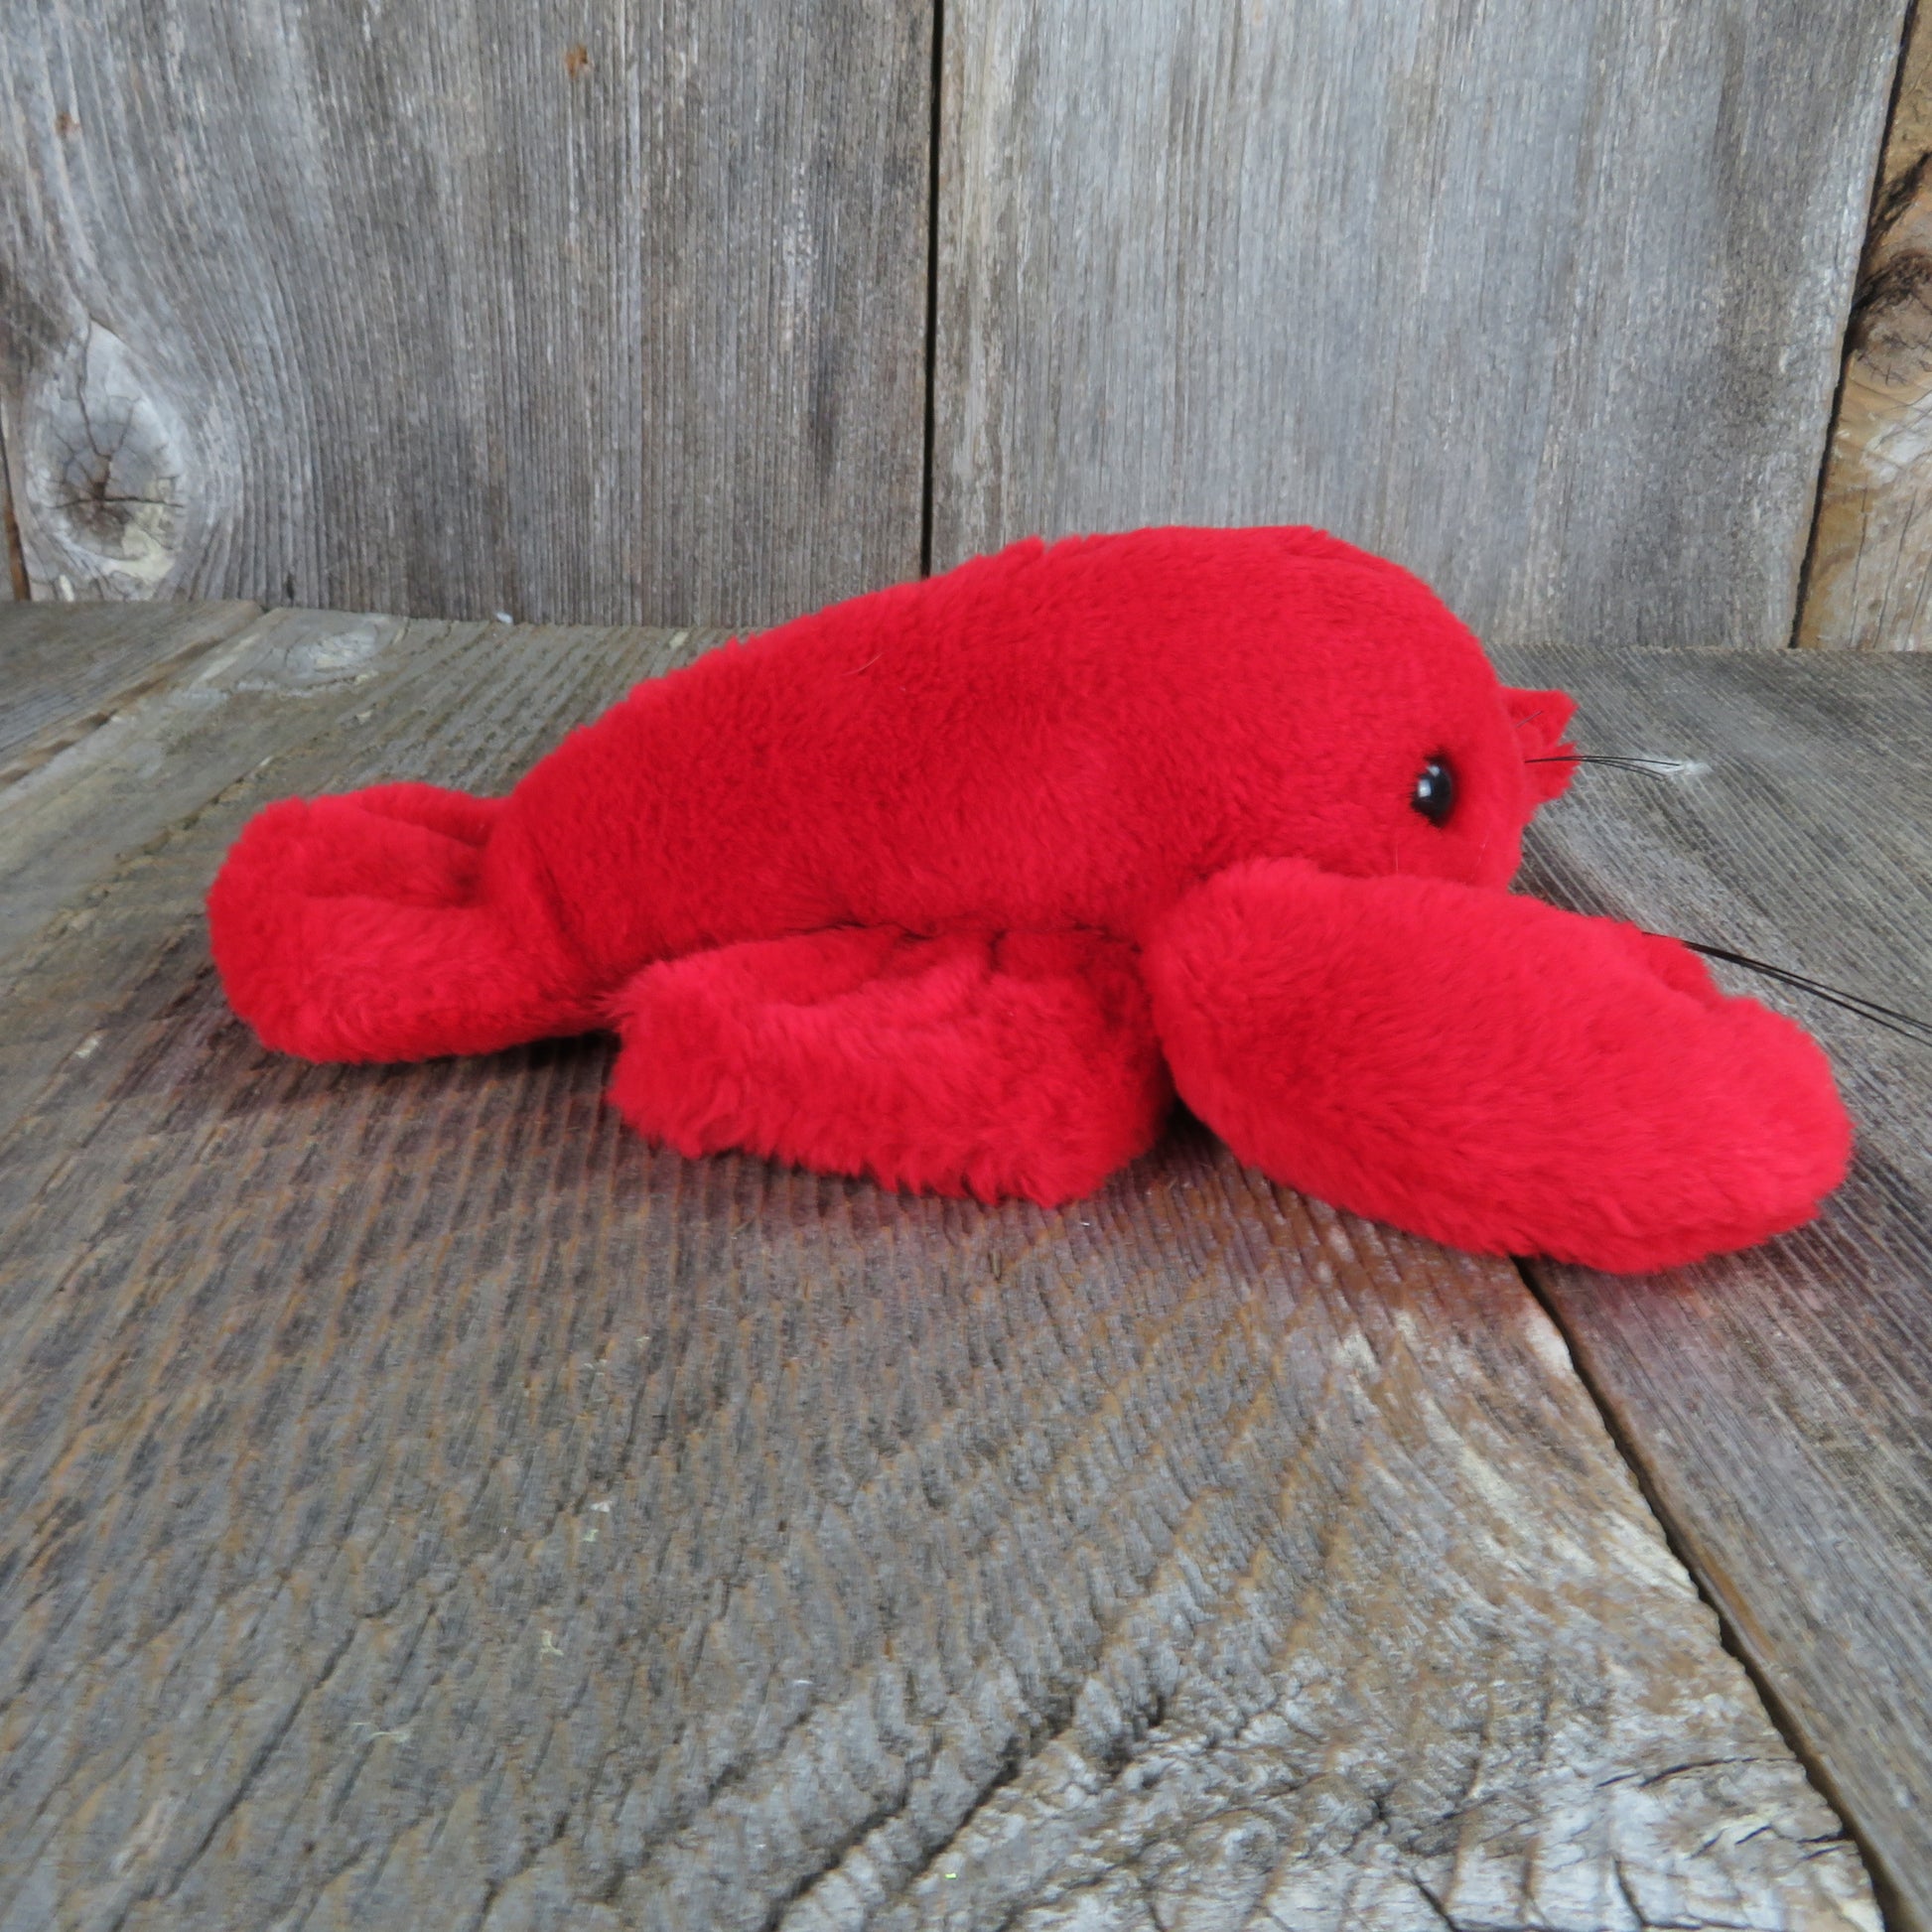 Vintage Lobster Plush Stuffed Animal Mary Meyer Red Ocean Sea Toy Doll Souvenir - At Grandma's Table